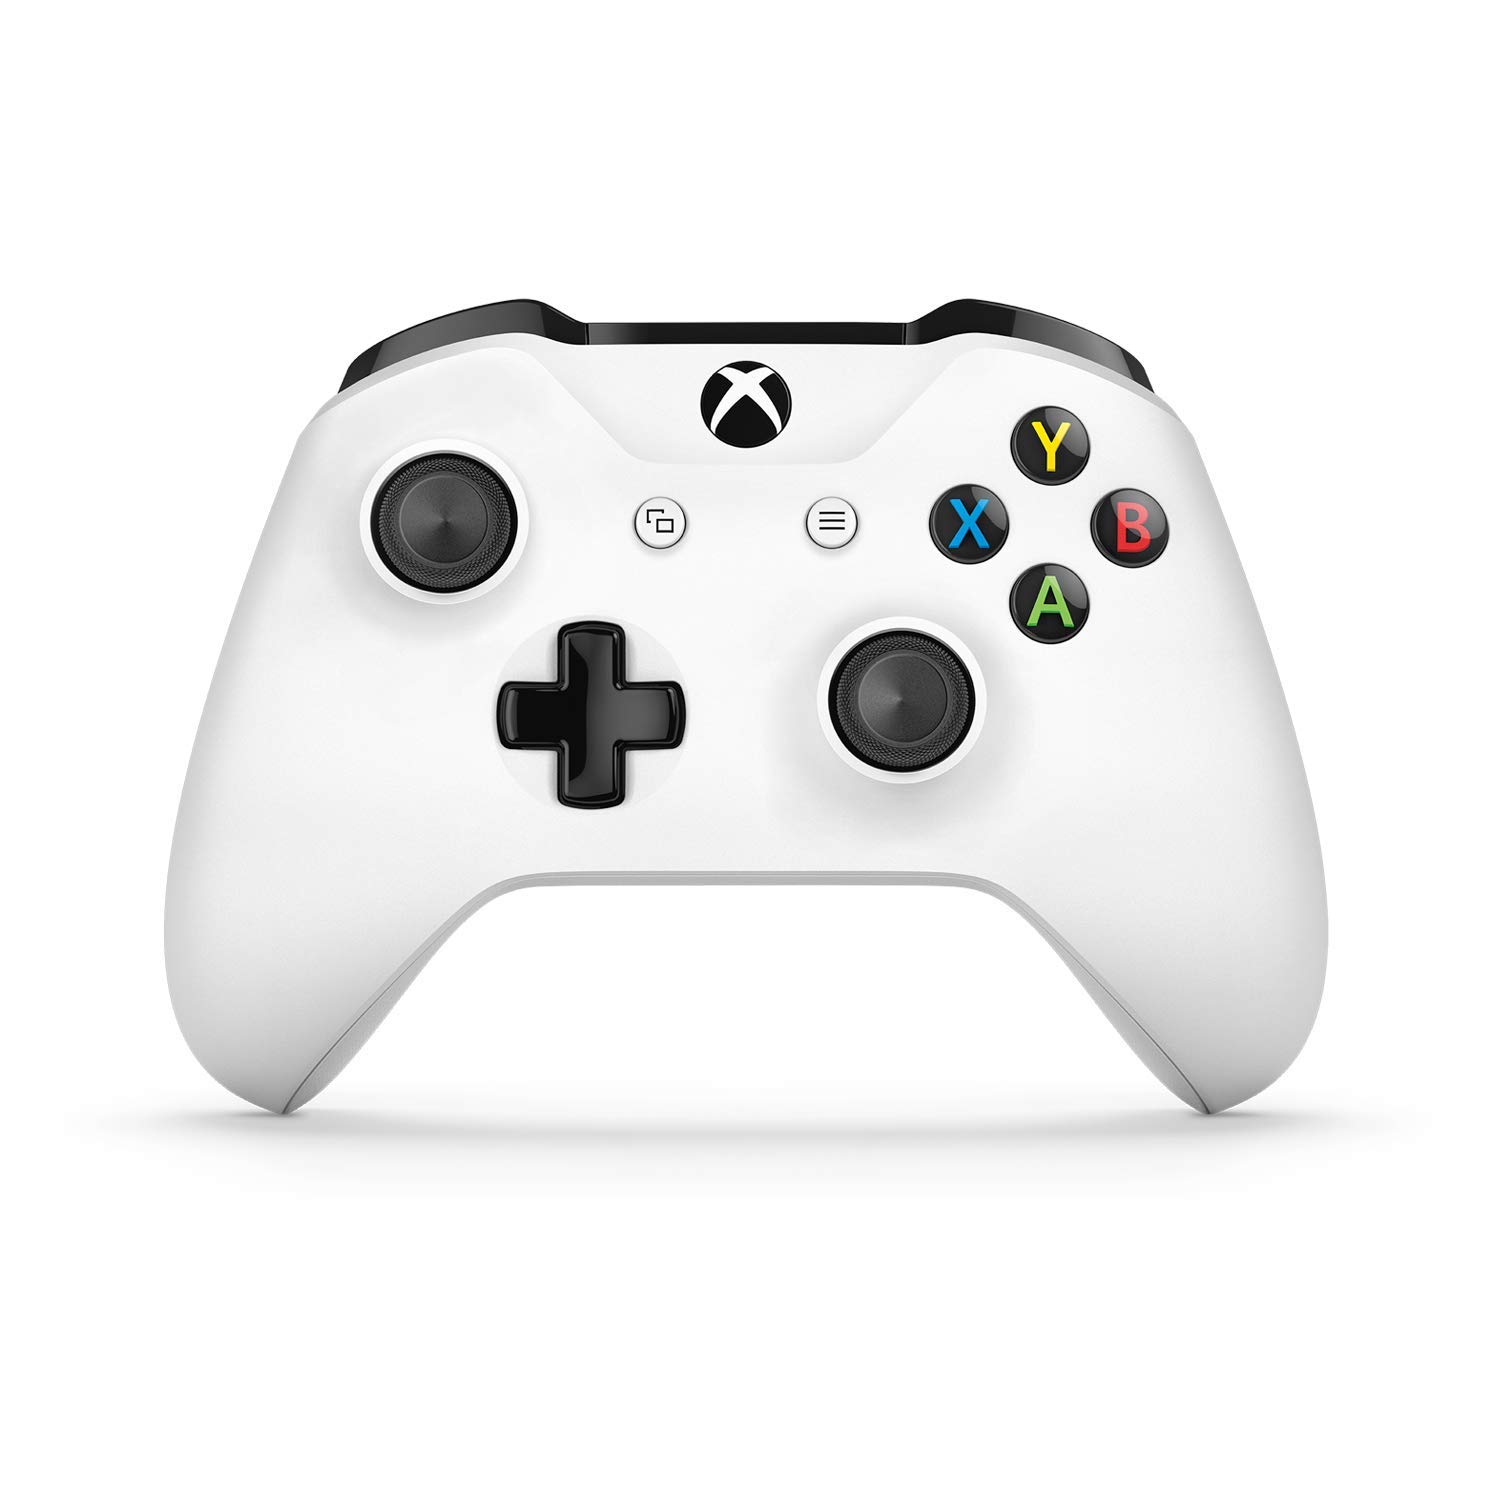 Mando Xbox One + Gears of War 4 solo 46€